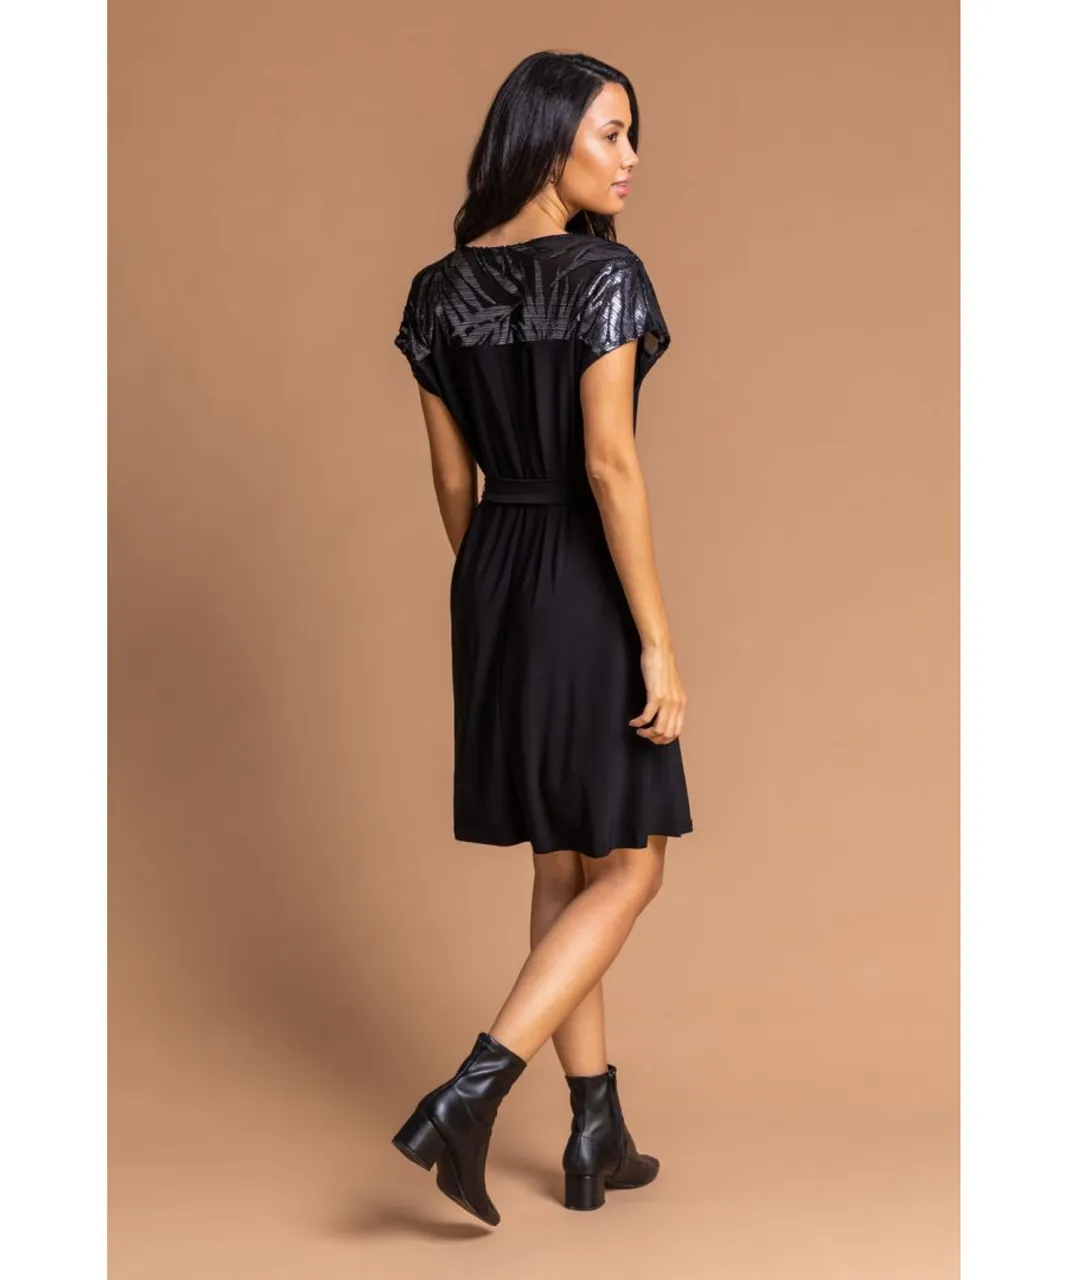 Roman Womens Foil Print Contrast Yoke Dress - Black